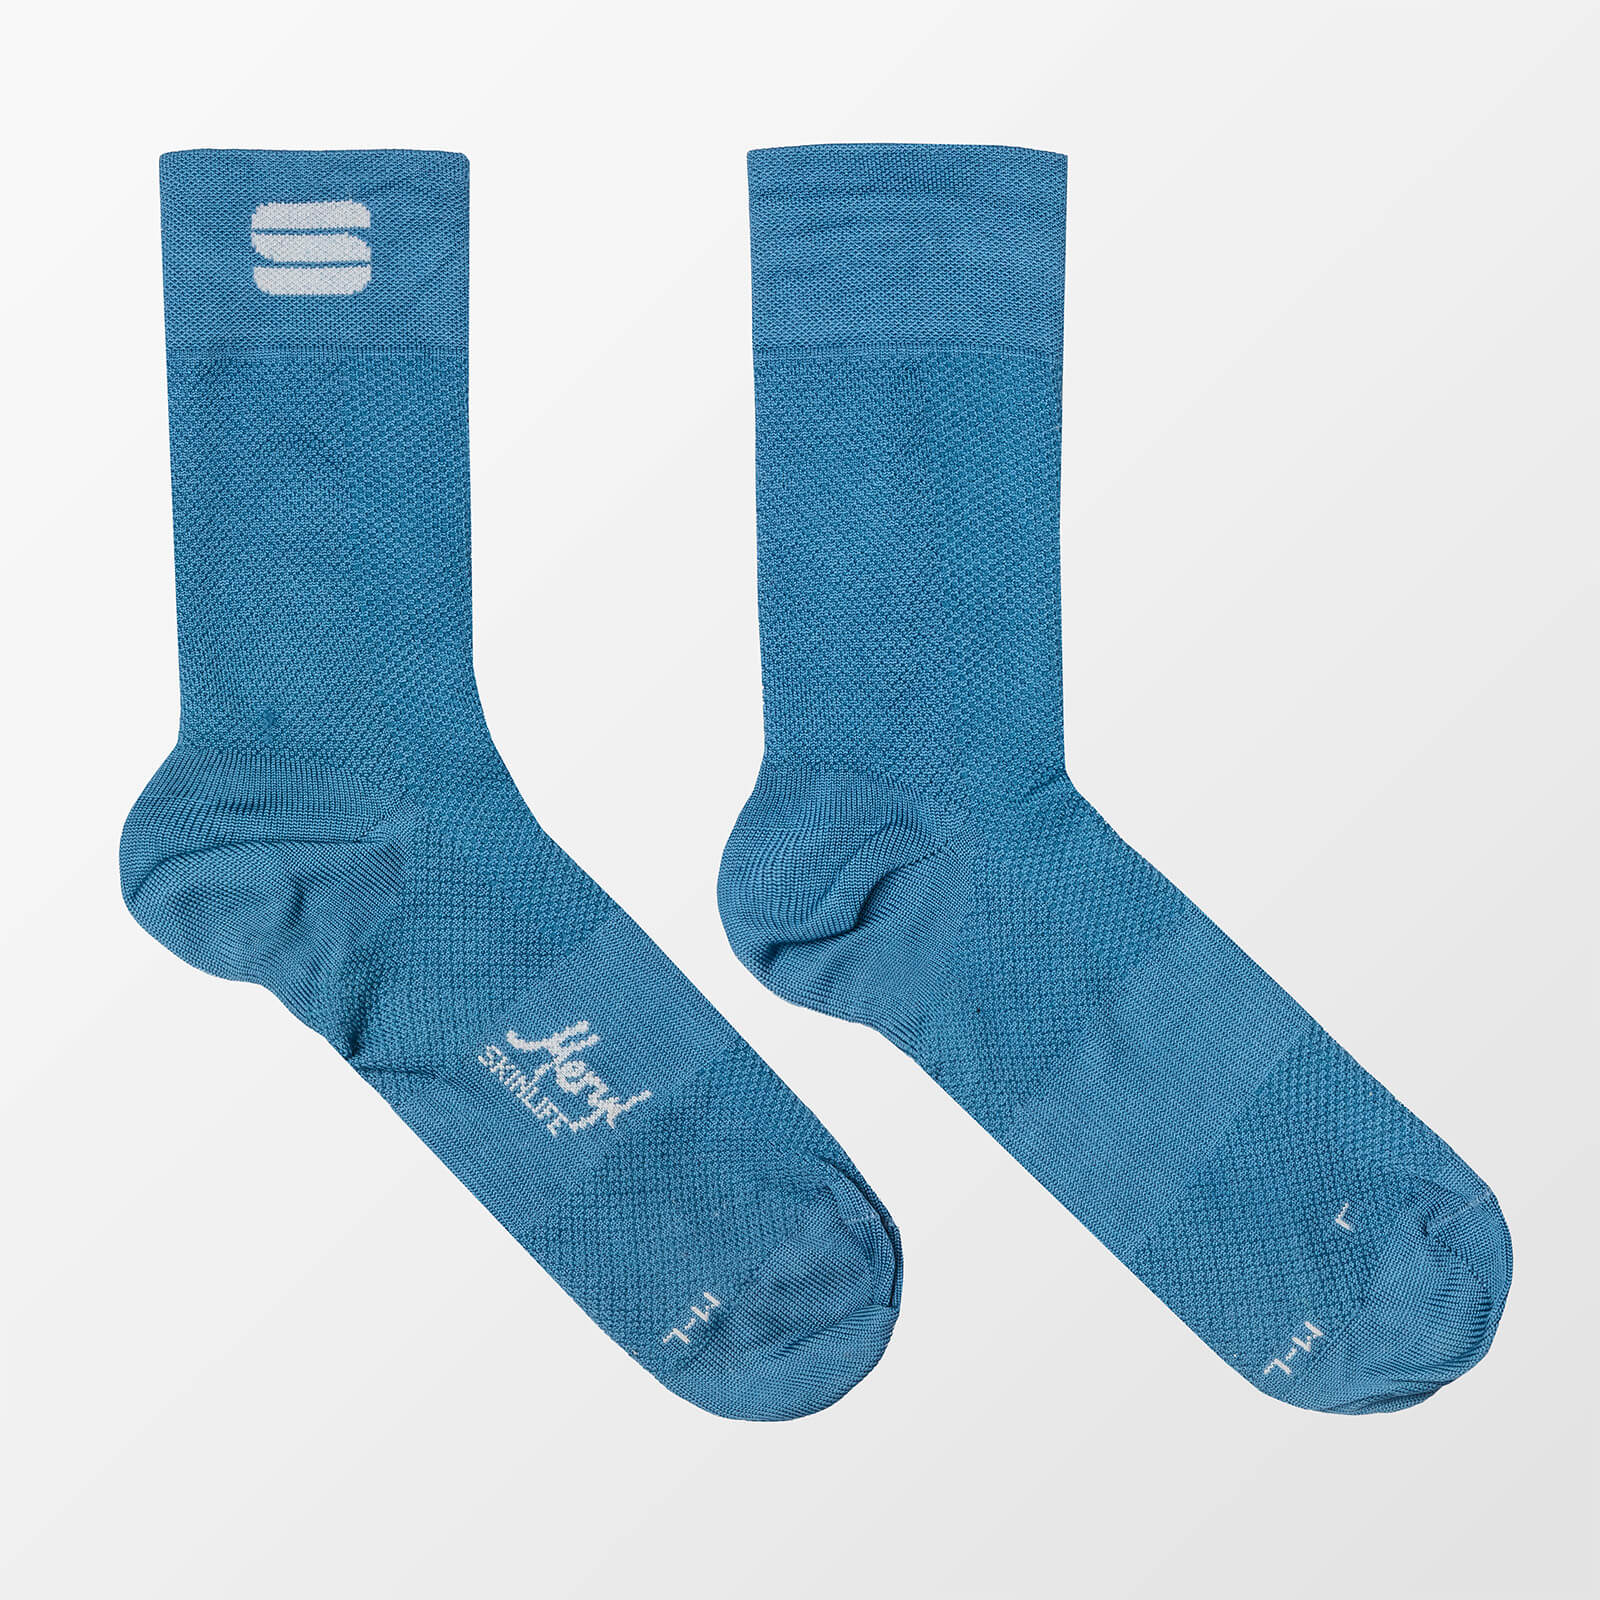 Sportful Matchy Socks - S - Blue Sea